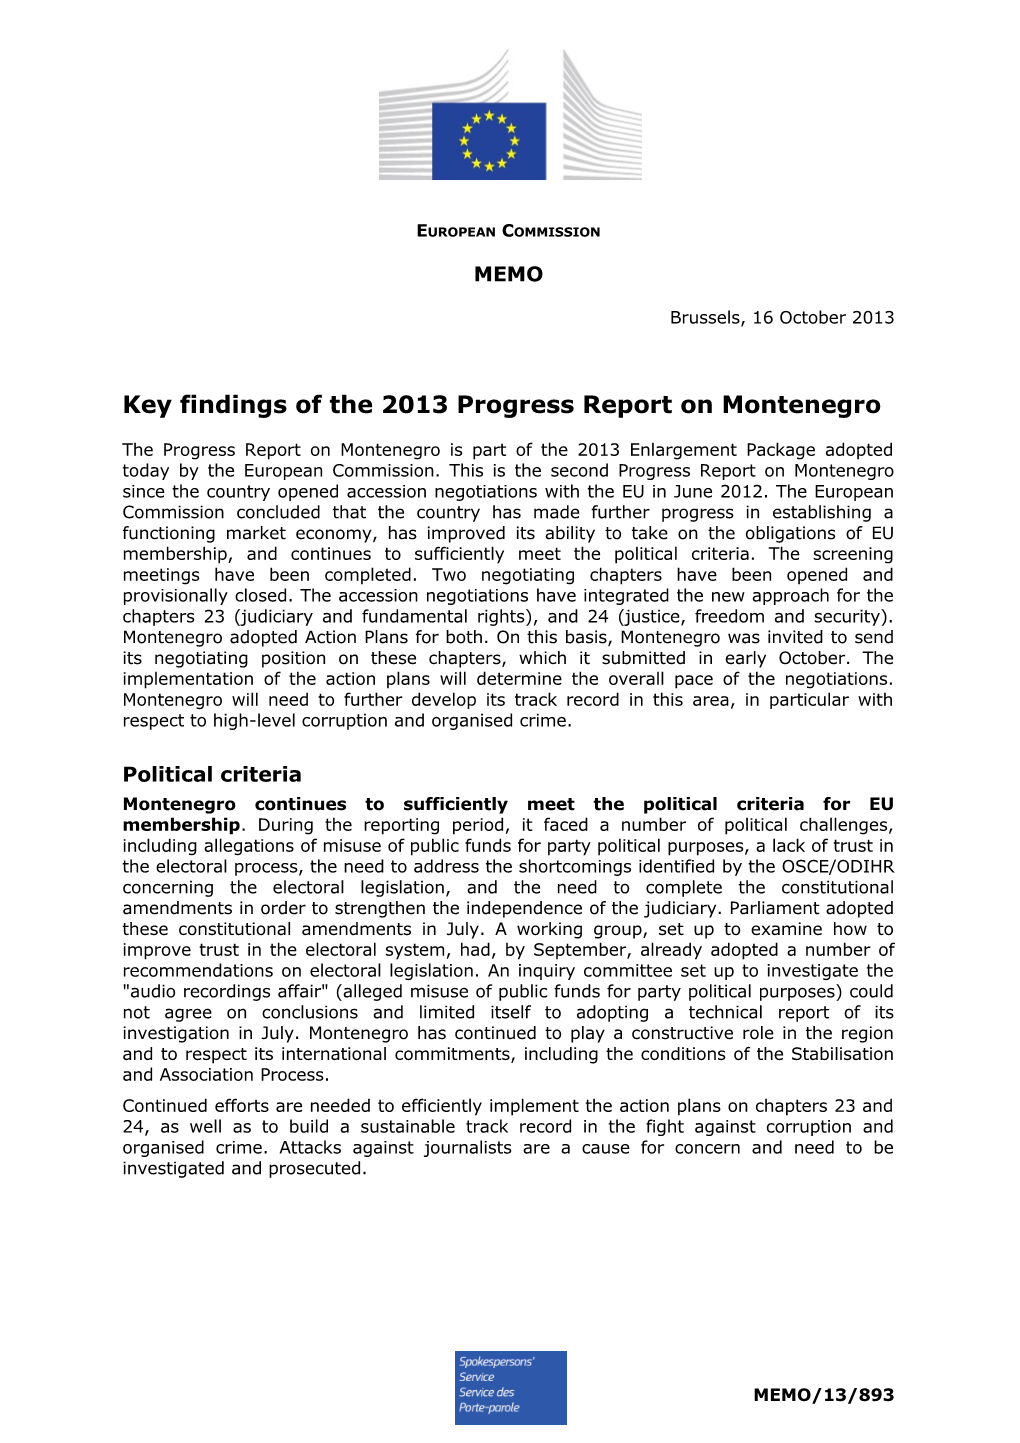 Key Findings of the 2013 Progress Report on Montenegro